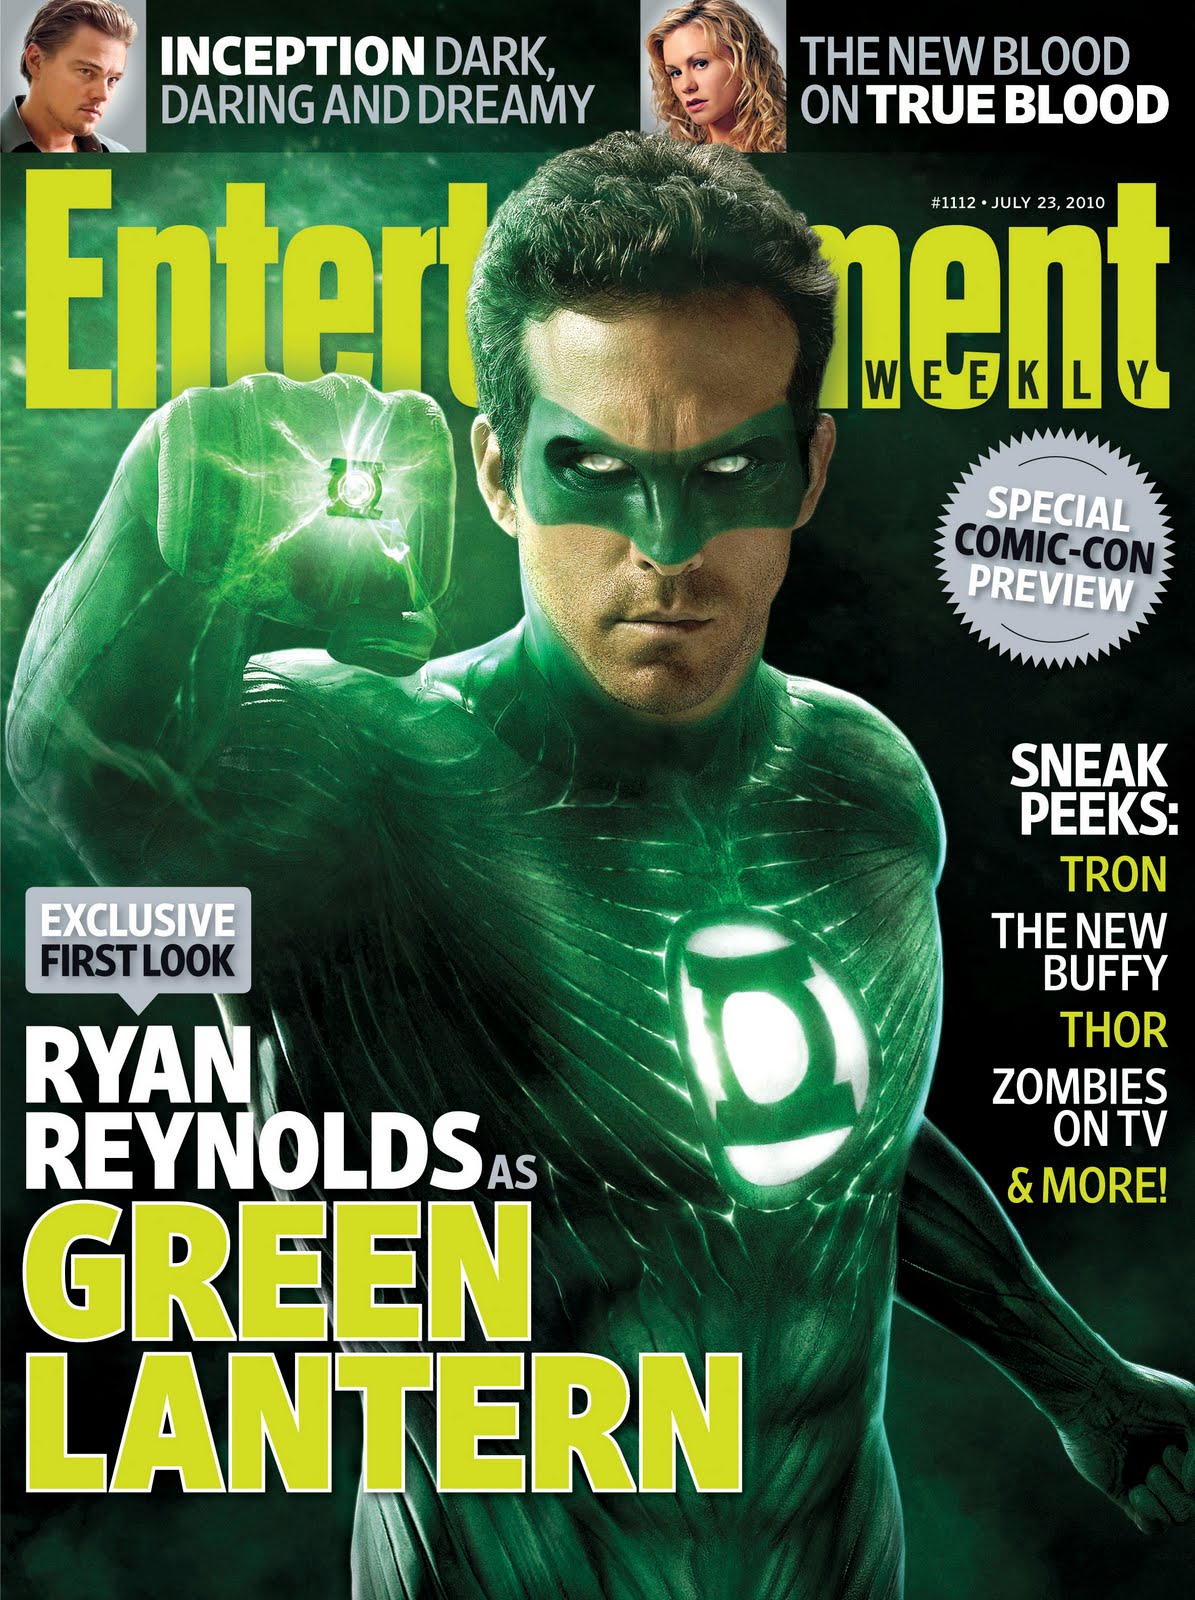 http://4.bp.blogspot.com/_eHkTwd4aRic/TI2VWzGpW_I/AAAAAAAAVLA/R_BUZoXqy8g/s1600/Green-Lantern-costume-Ryan-Reynolds.jpg